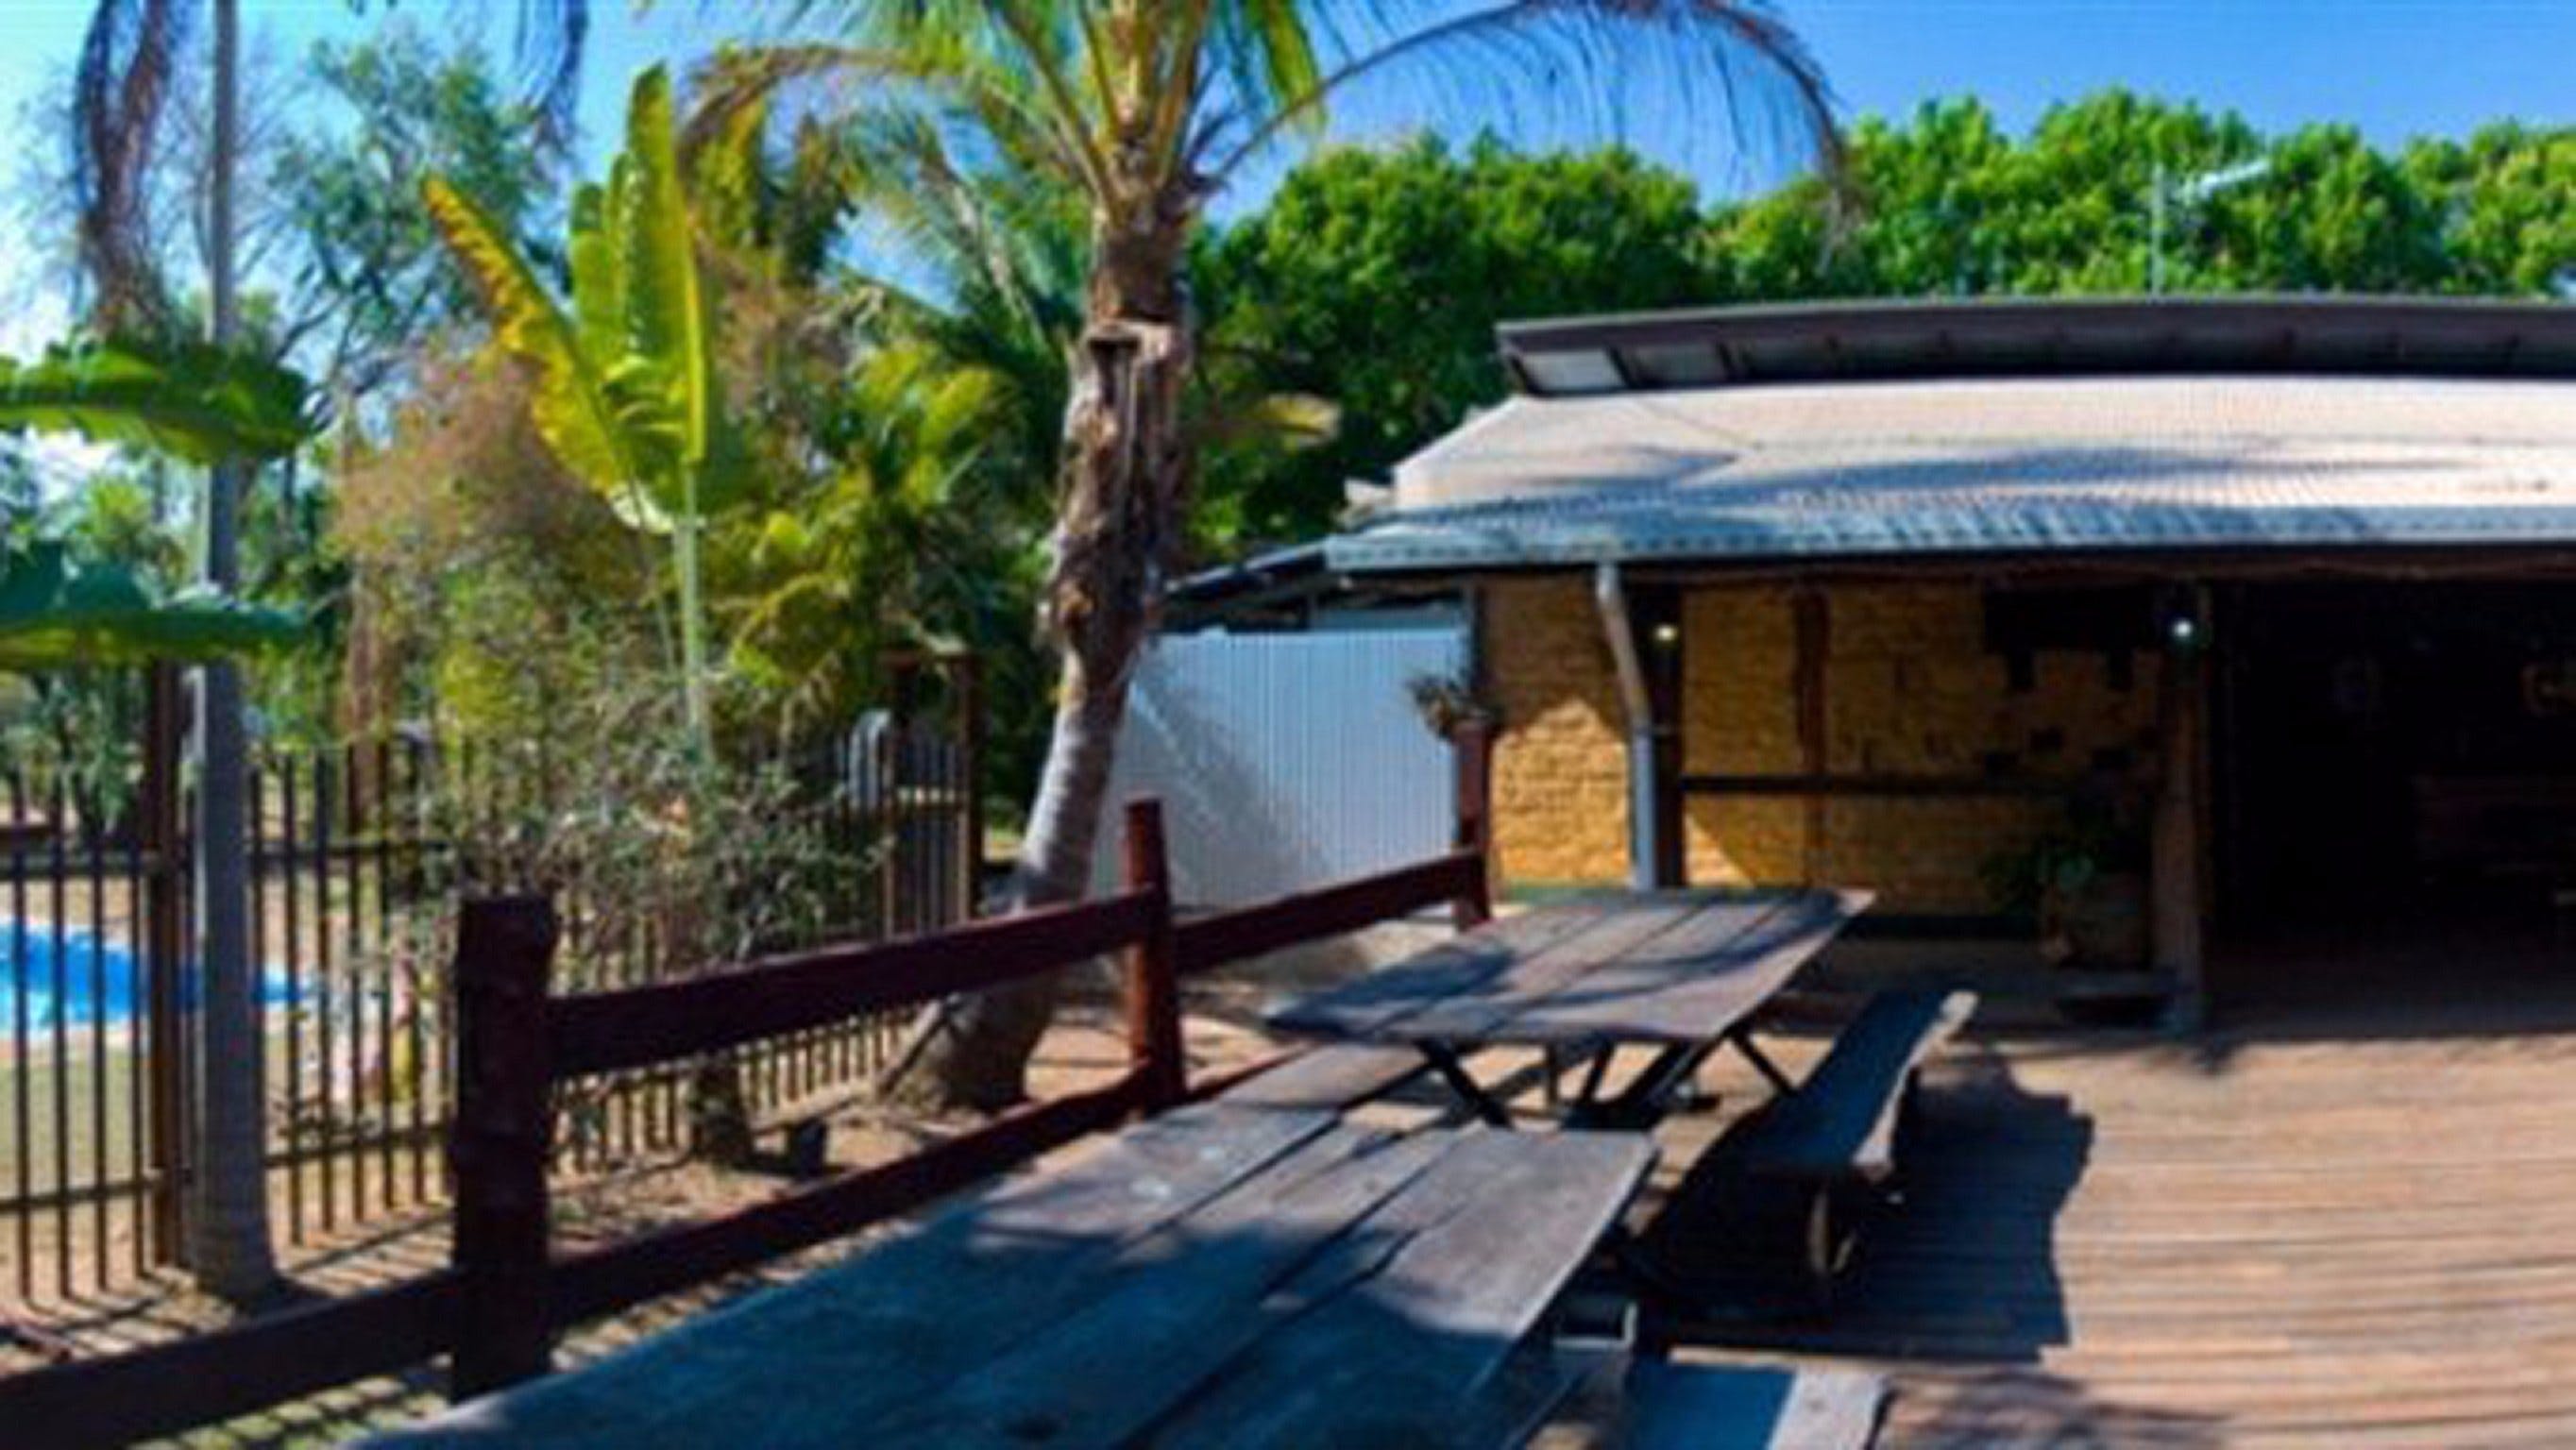 Lazy Lizard Caravan Park - Accommodation Cooktown